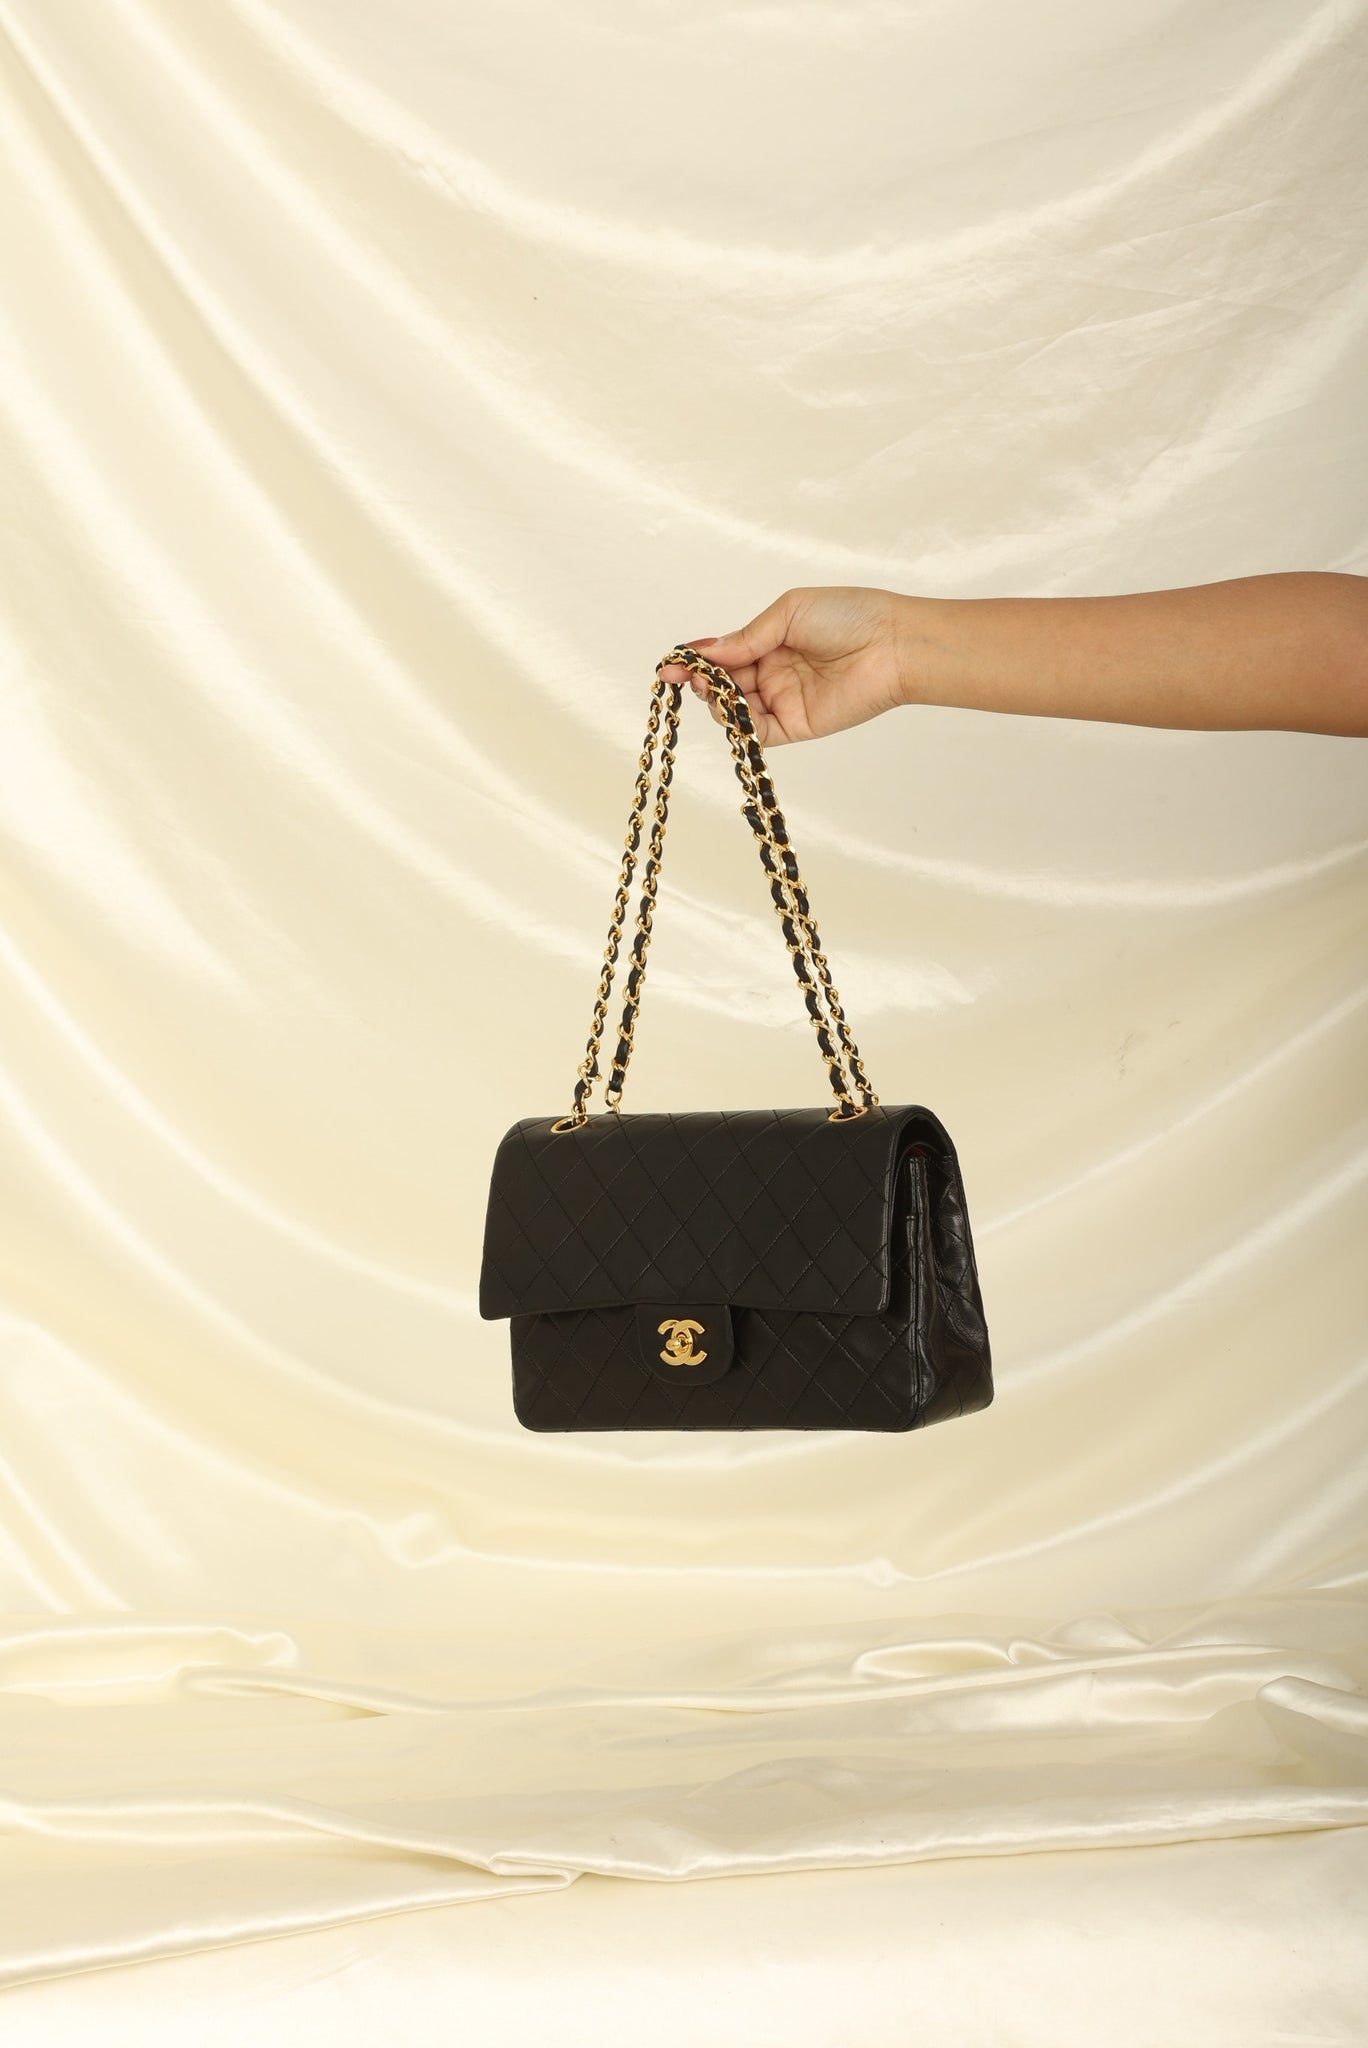 Chanel 2.55 Caviar Medium Classic Double Flap Bag - black/gold